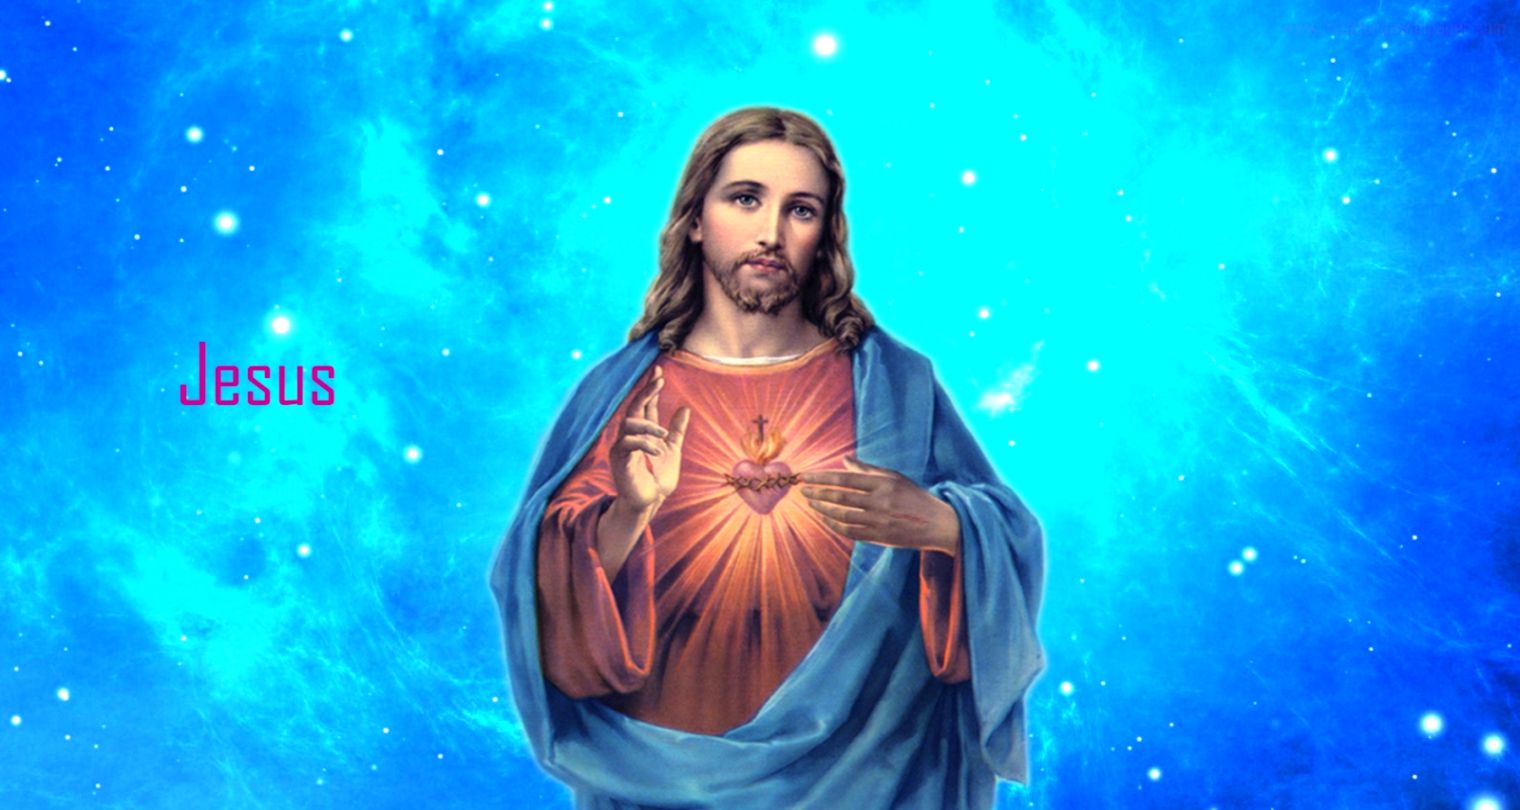 Download Hd Jesus Wallpaper Free Download - Jesus Childhood On Itl.cat